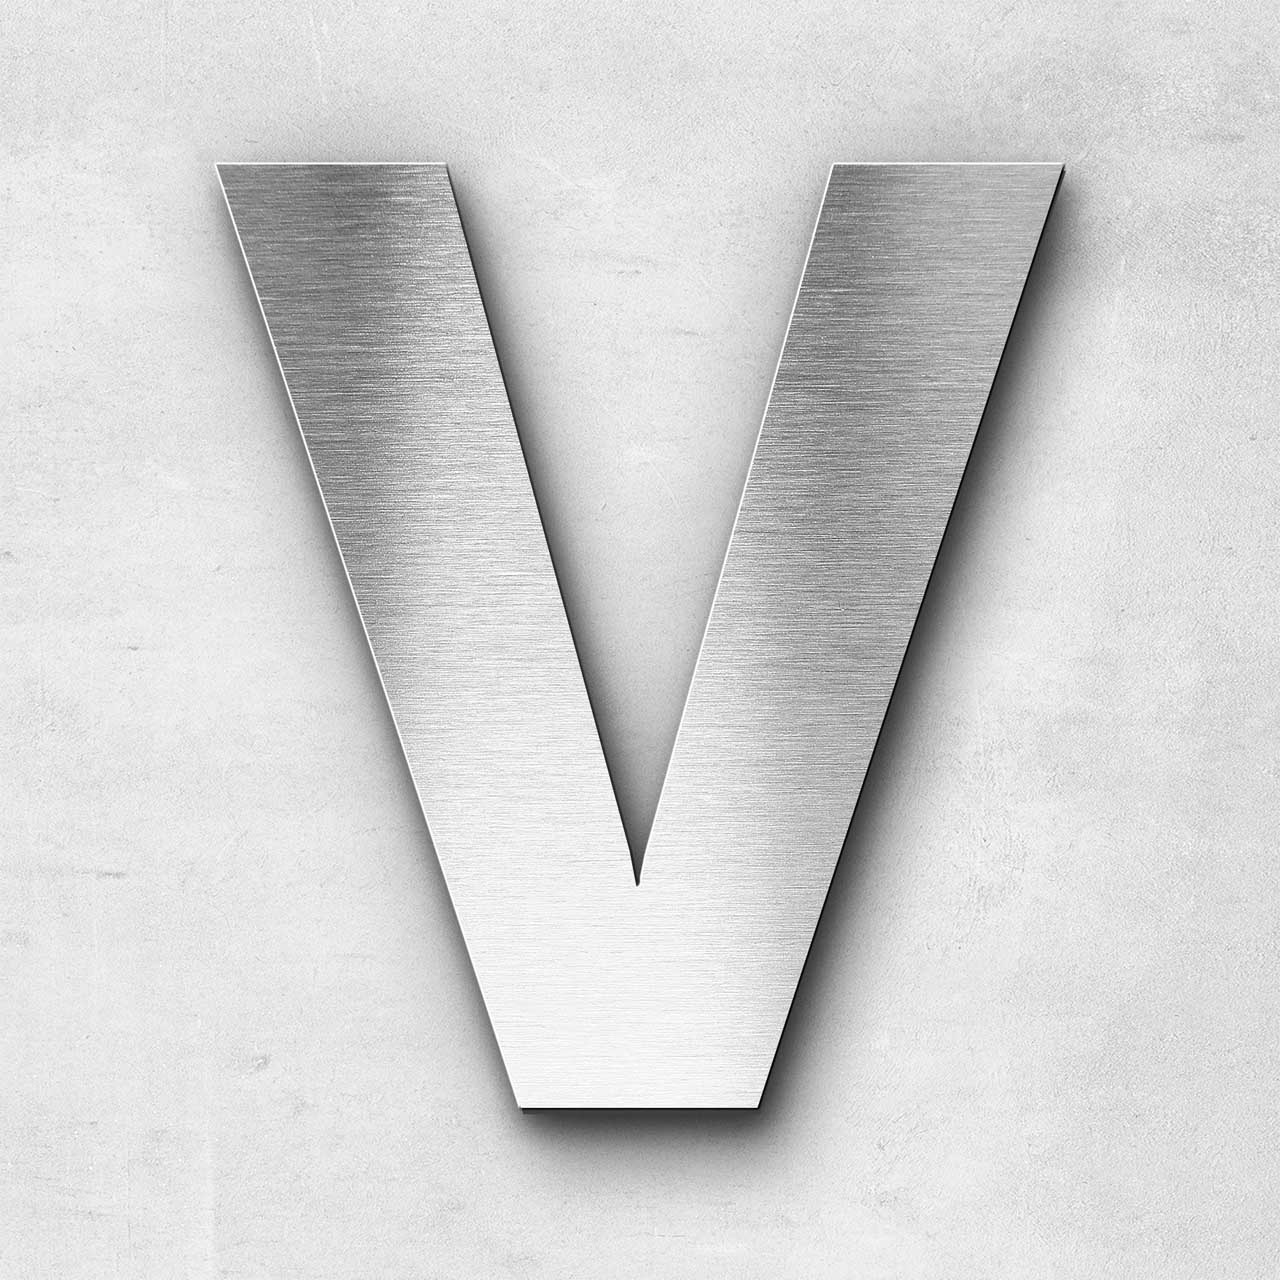 V. Буква v. Металлическая буква v. Серебряная буква v. Буква v черно белая.